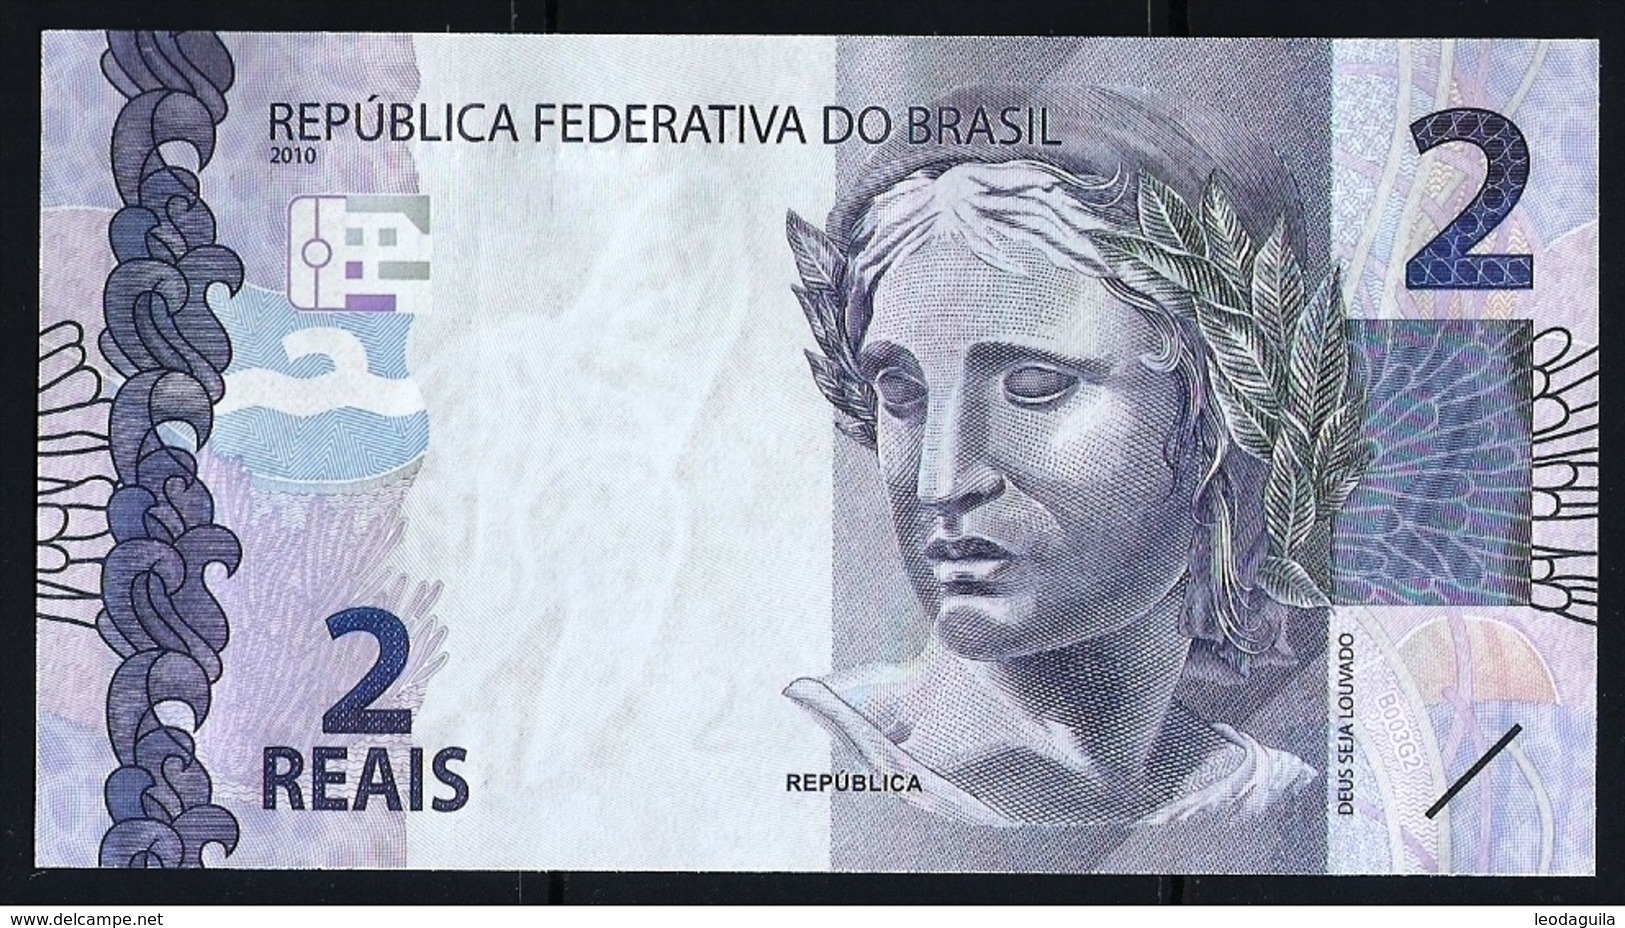 BRAZIL CURRENCY  - 2 REAIS  - 3 Banknotes 2010 - Brazil